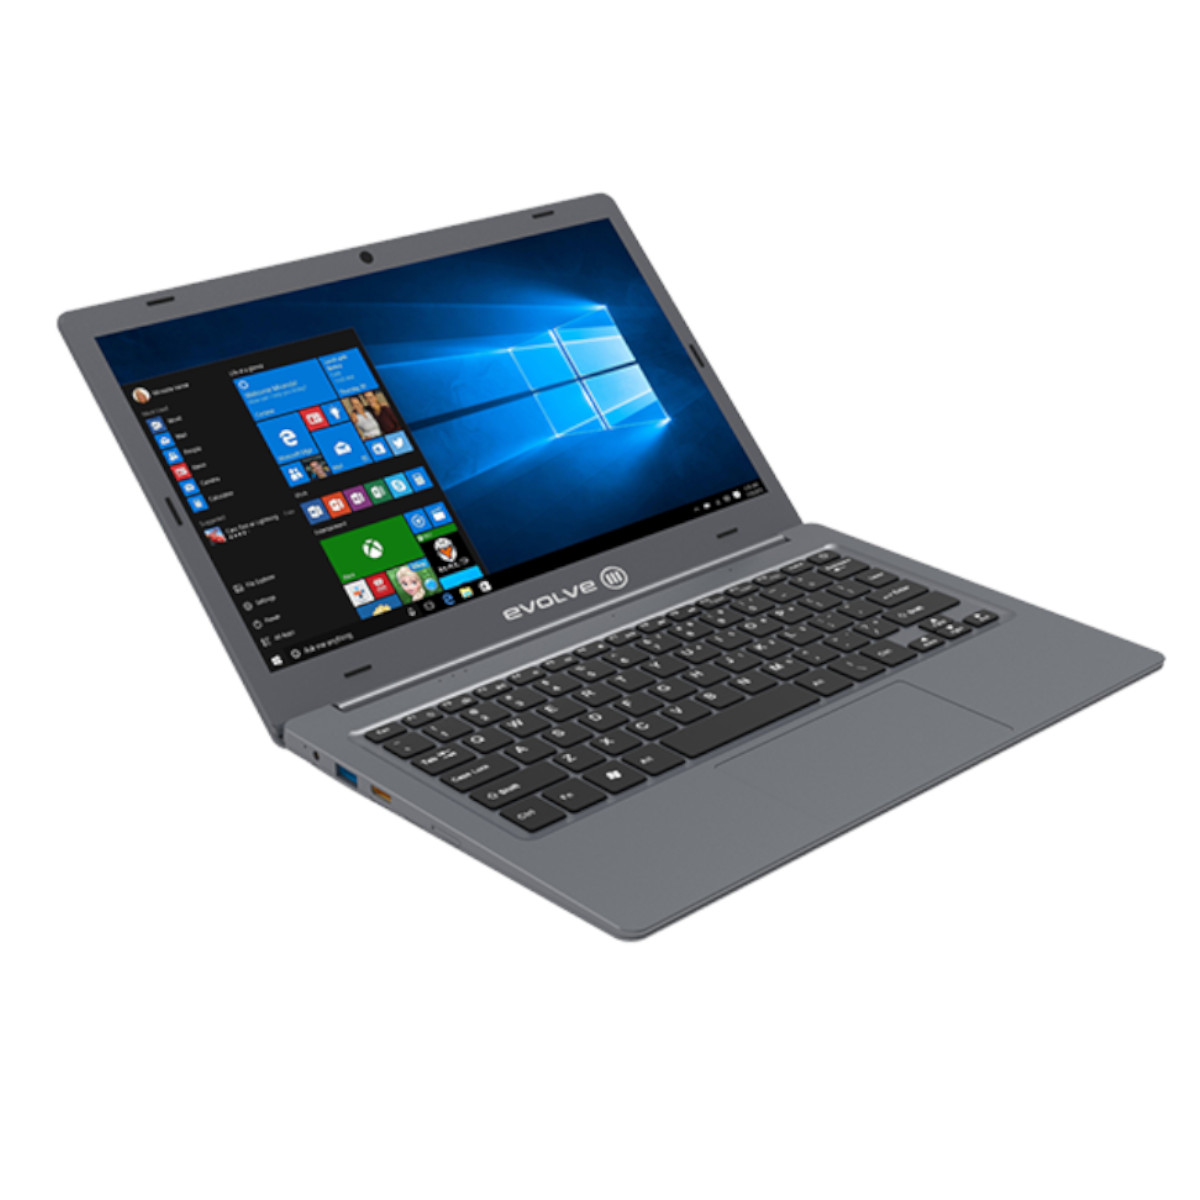 Laptop Evolve 3 Maestro Ebook 11.6 Pulgadas 4G LTE 64GB 4GB RAM